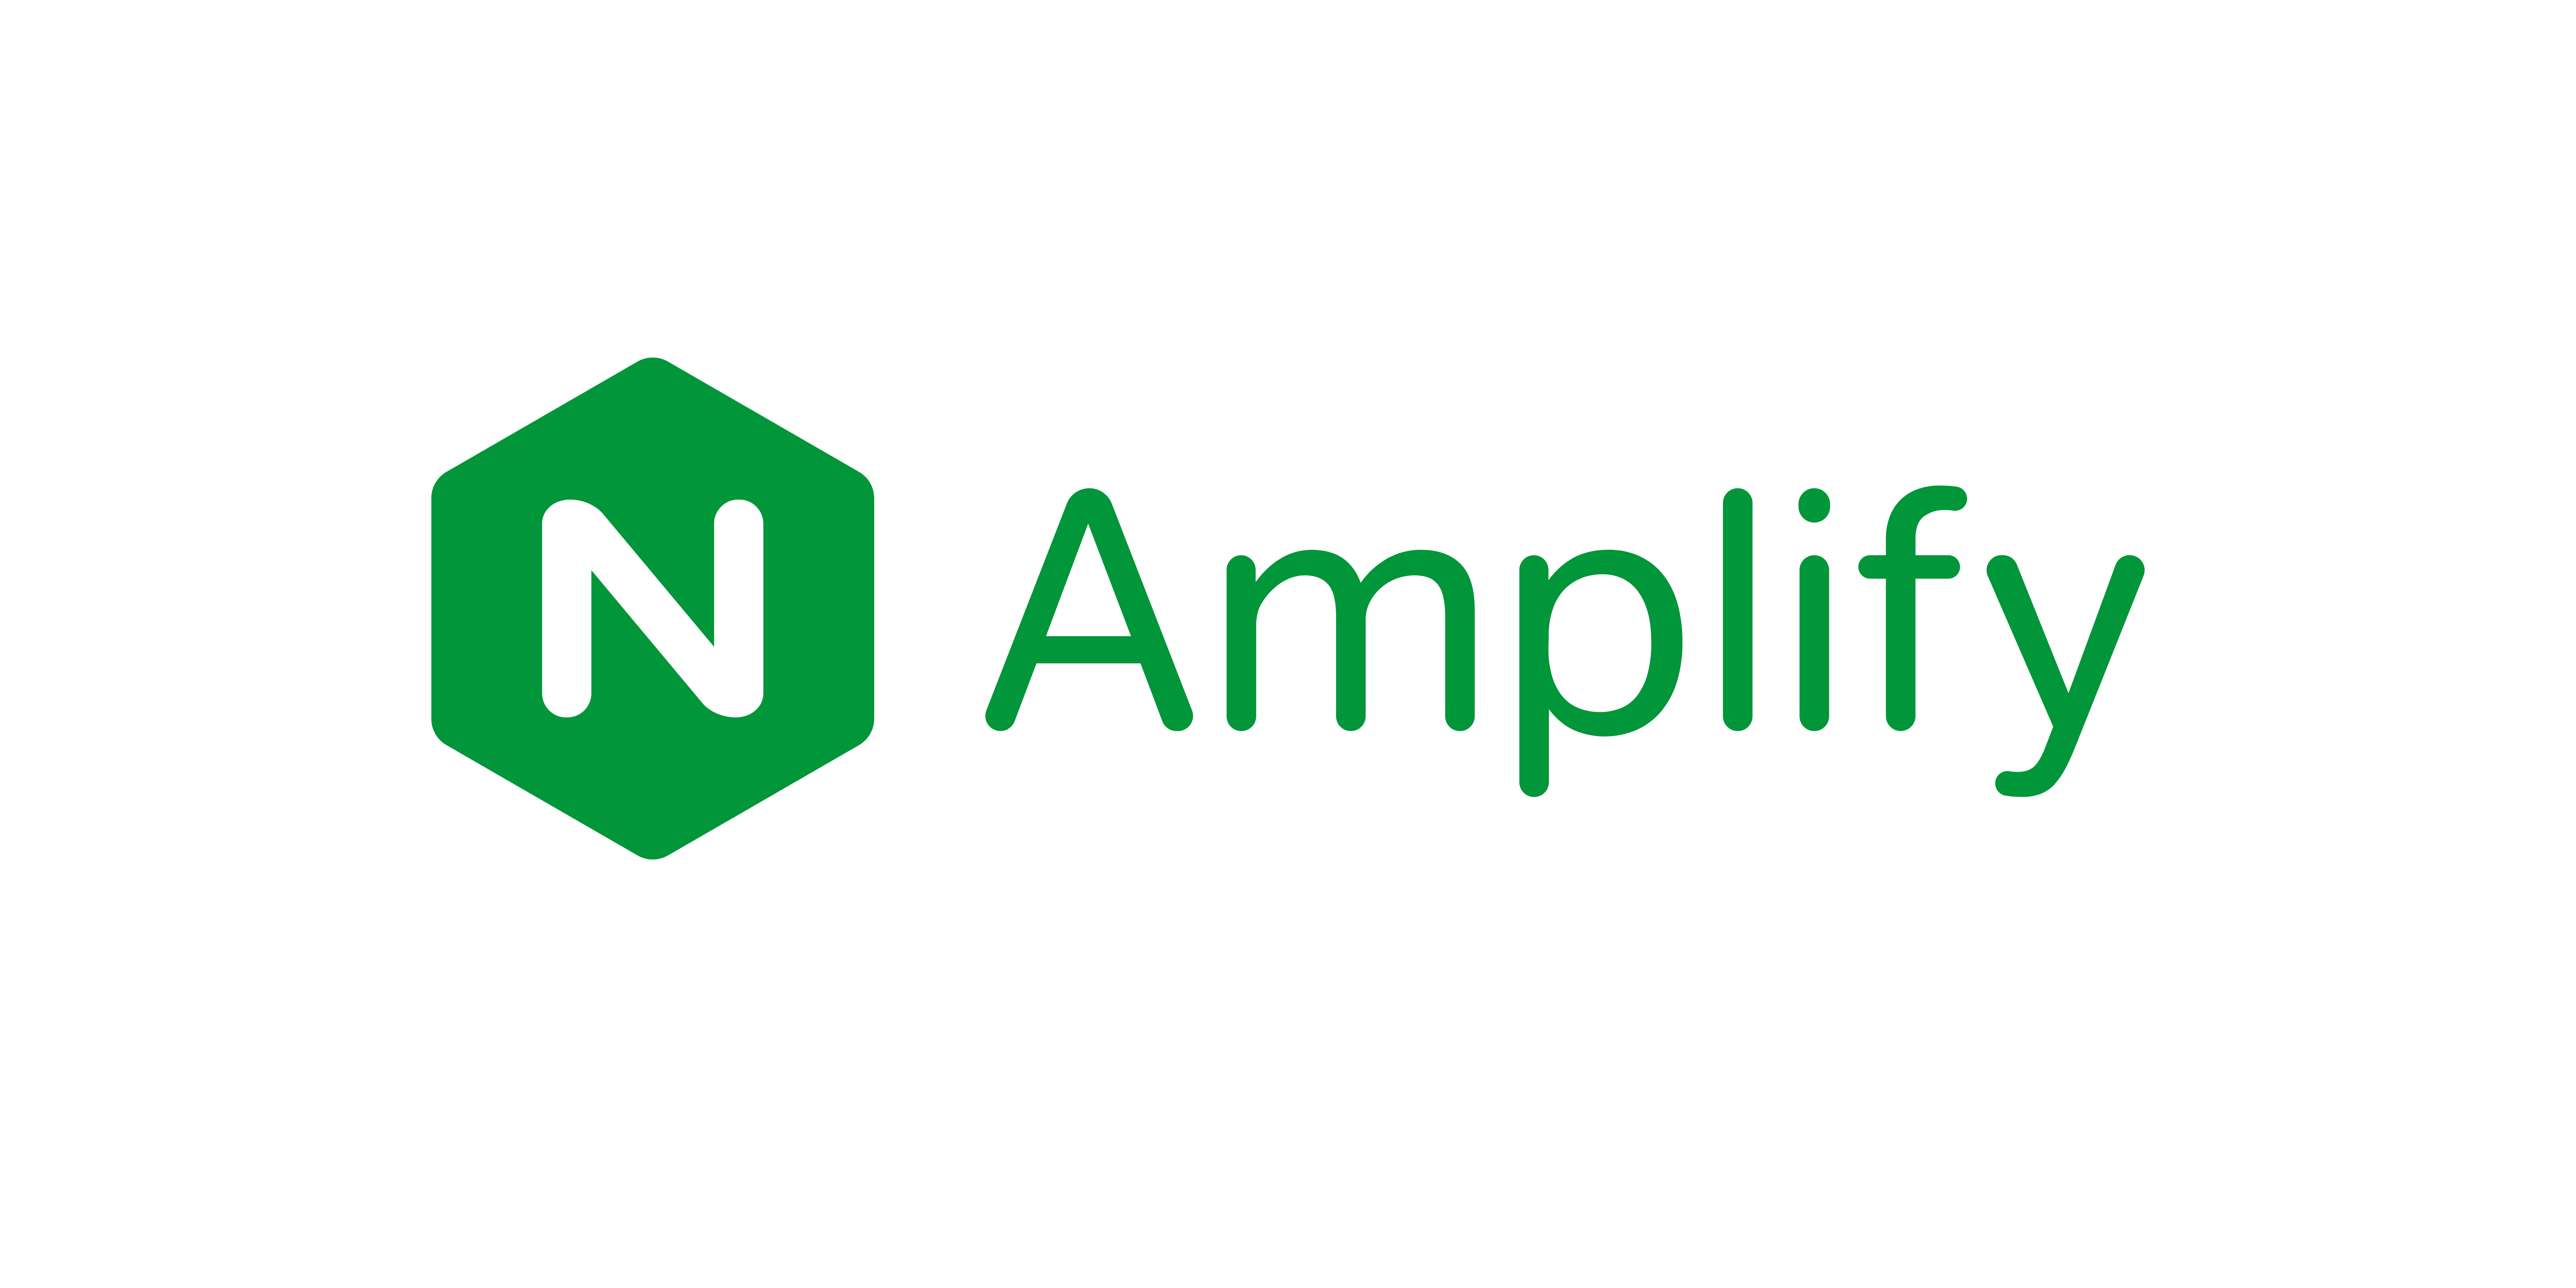 Nginx Amplify